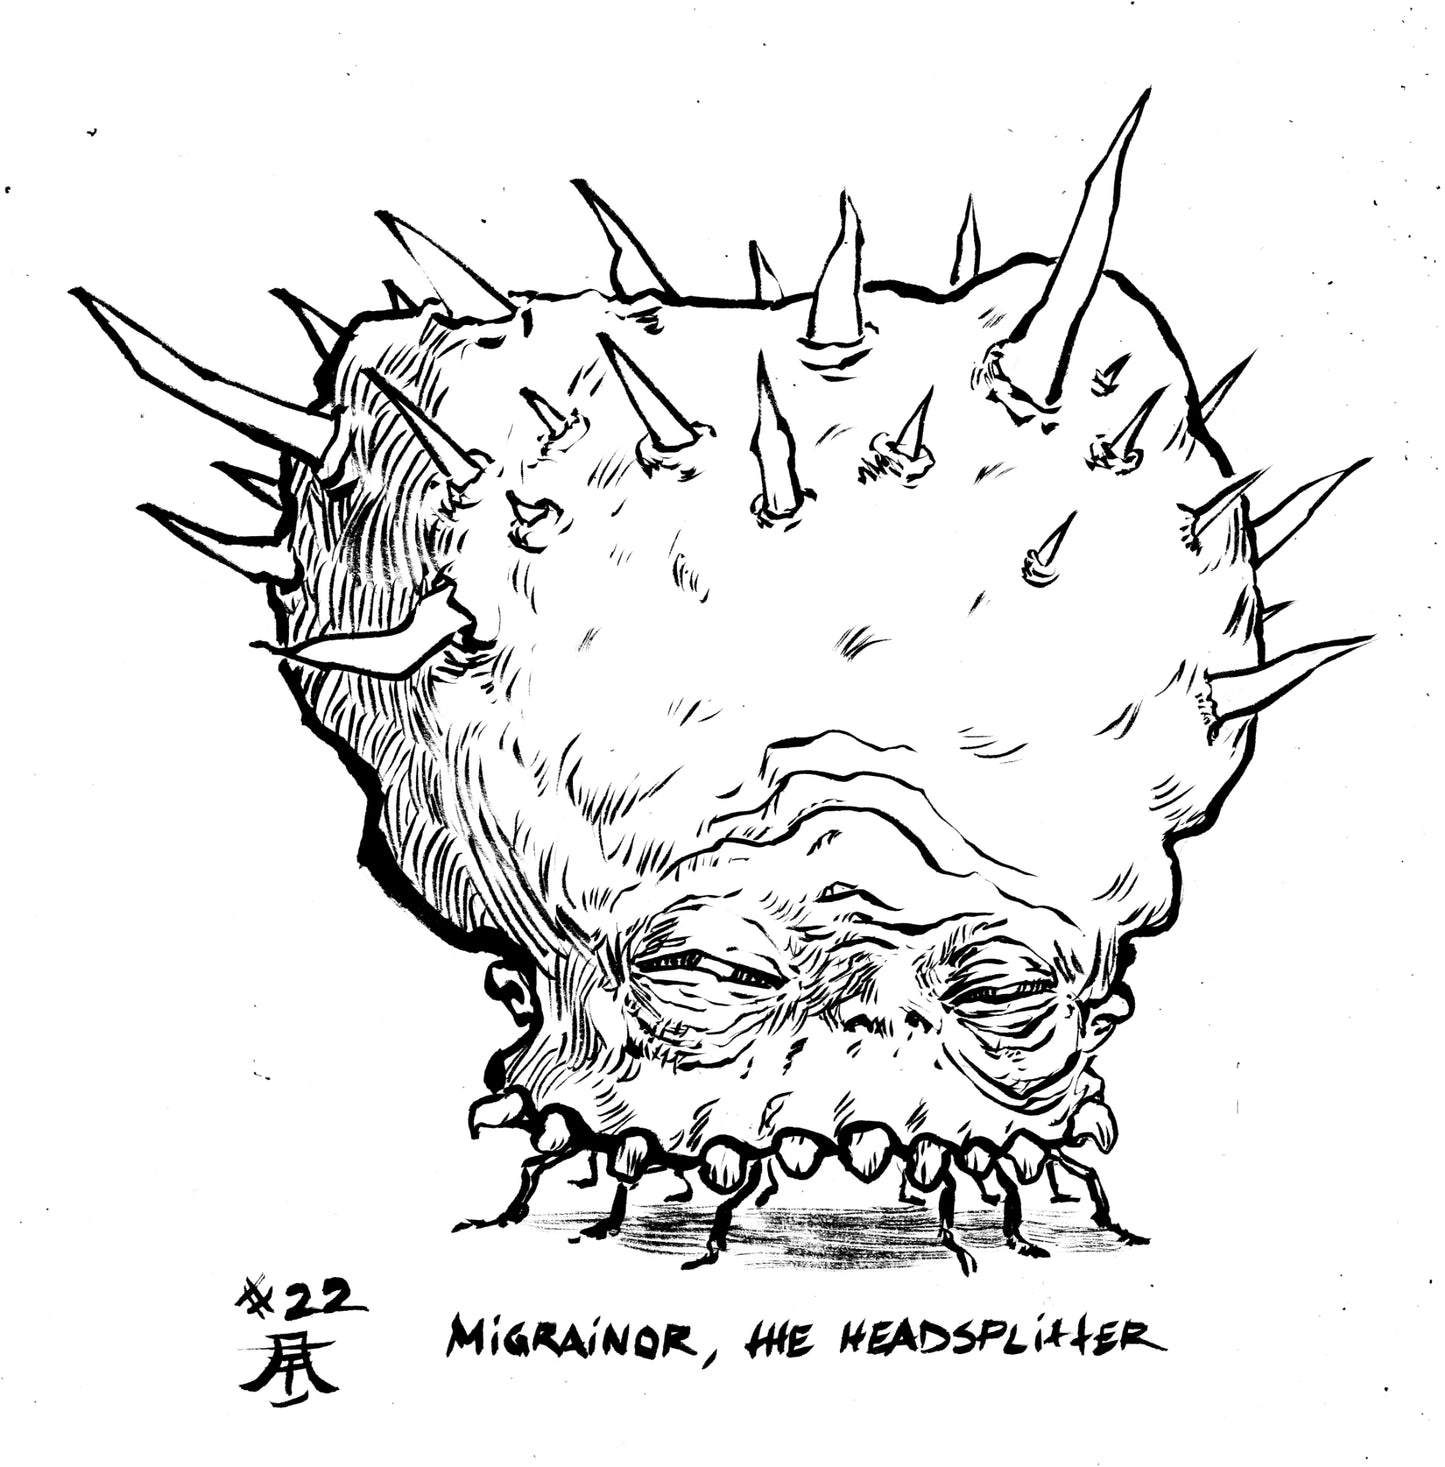 # 22 - Migrainor, The Headsplitter